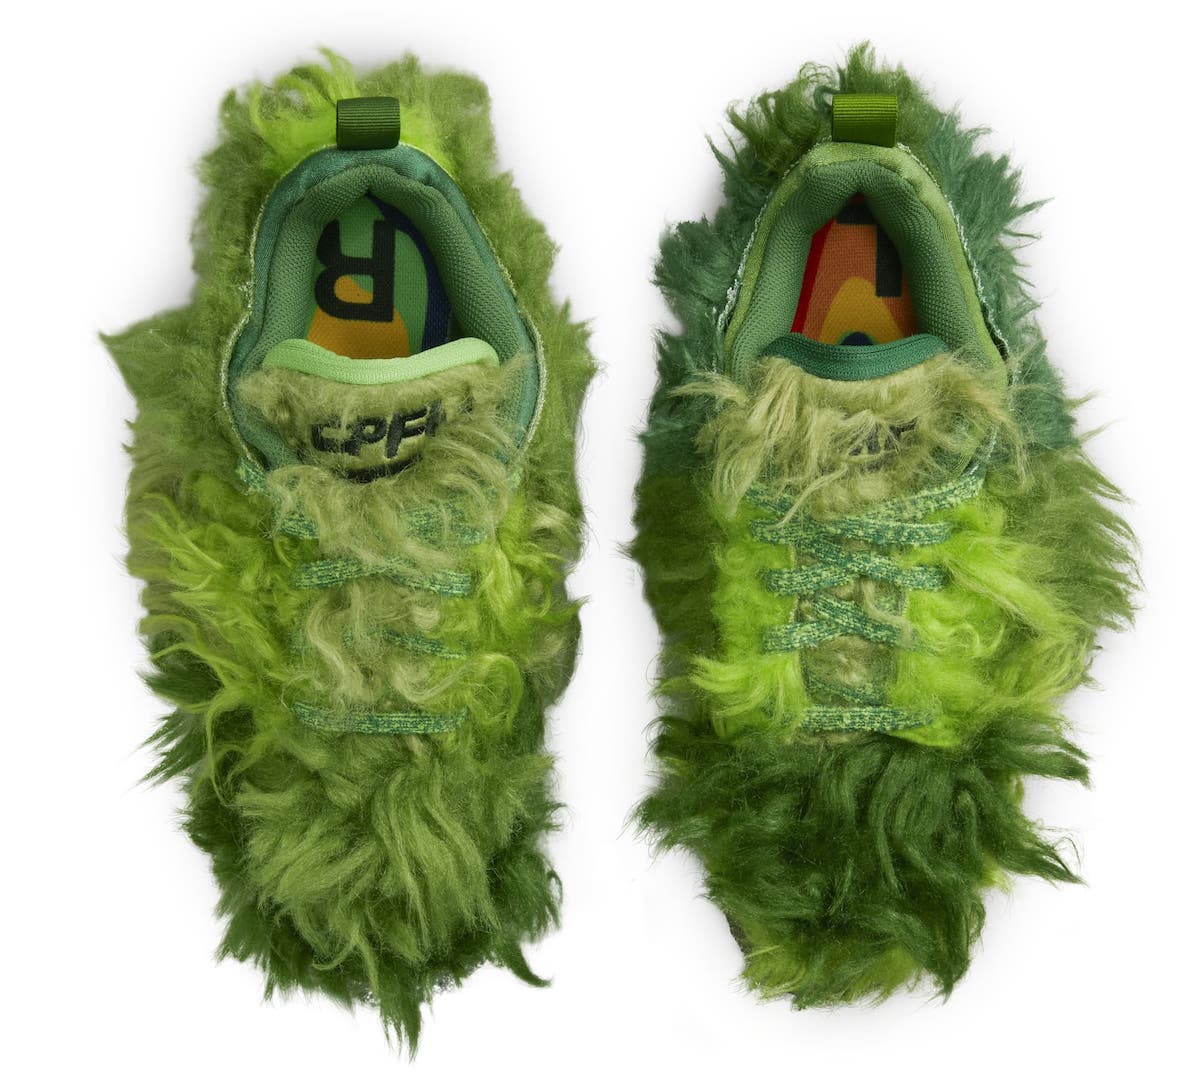 Cactus Plant Flea Market Nike CPFM Flea 1 Grinch DQ5109-300 Release Date